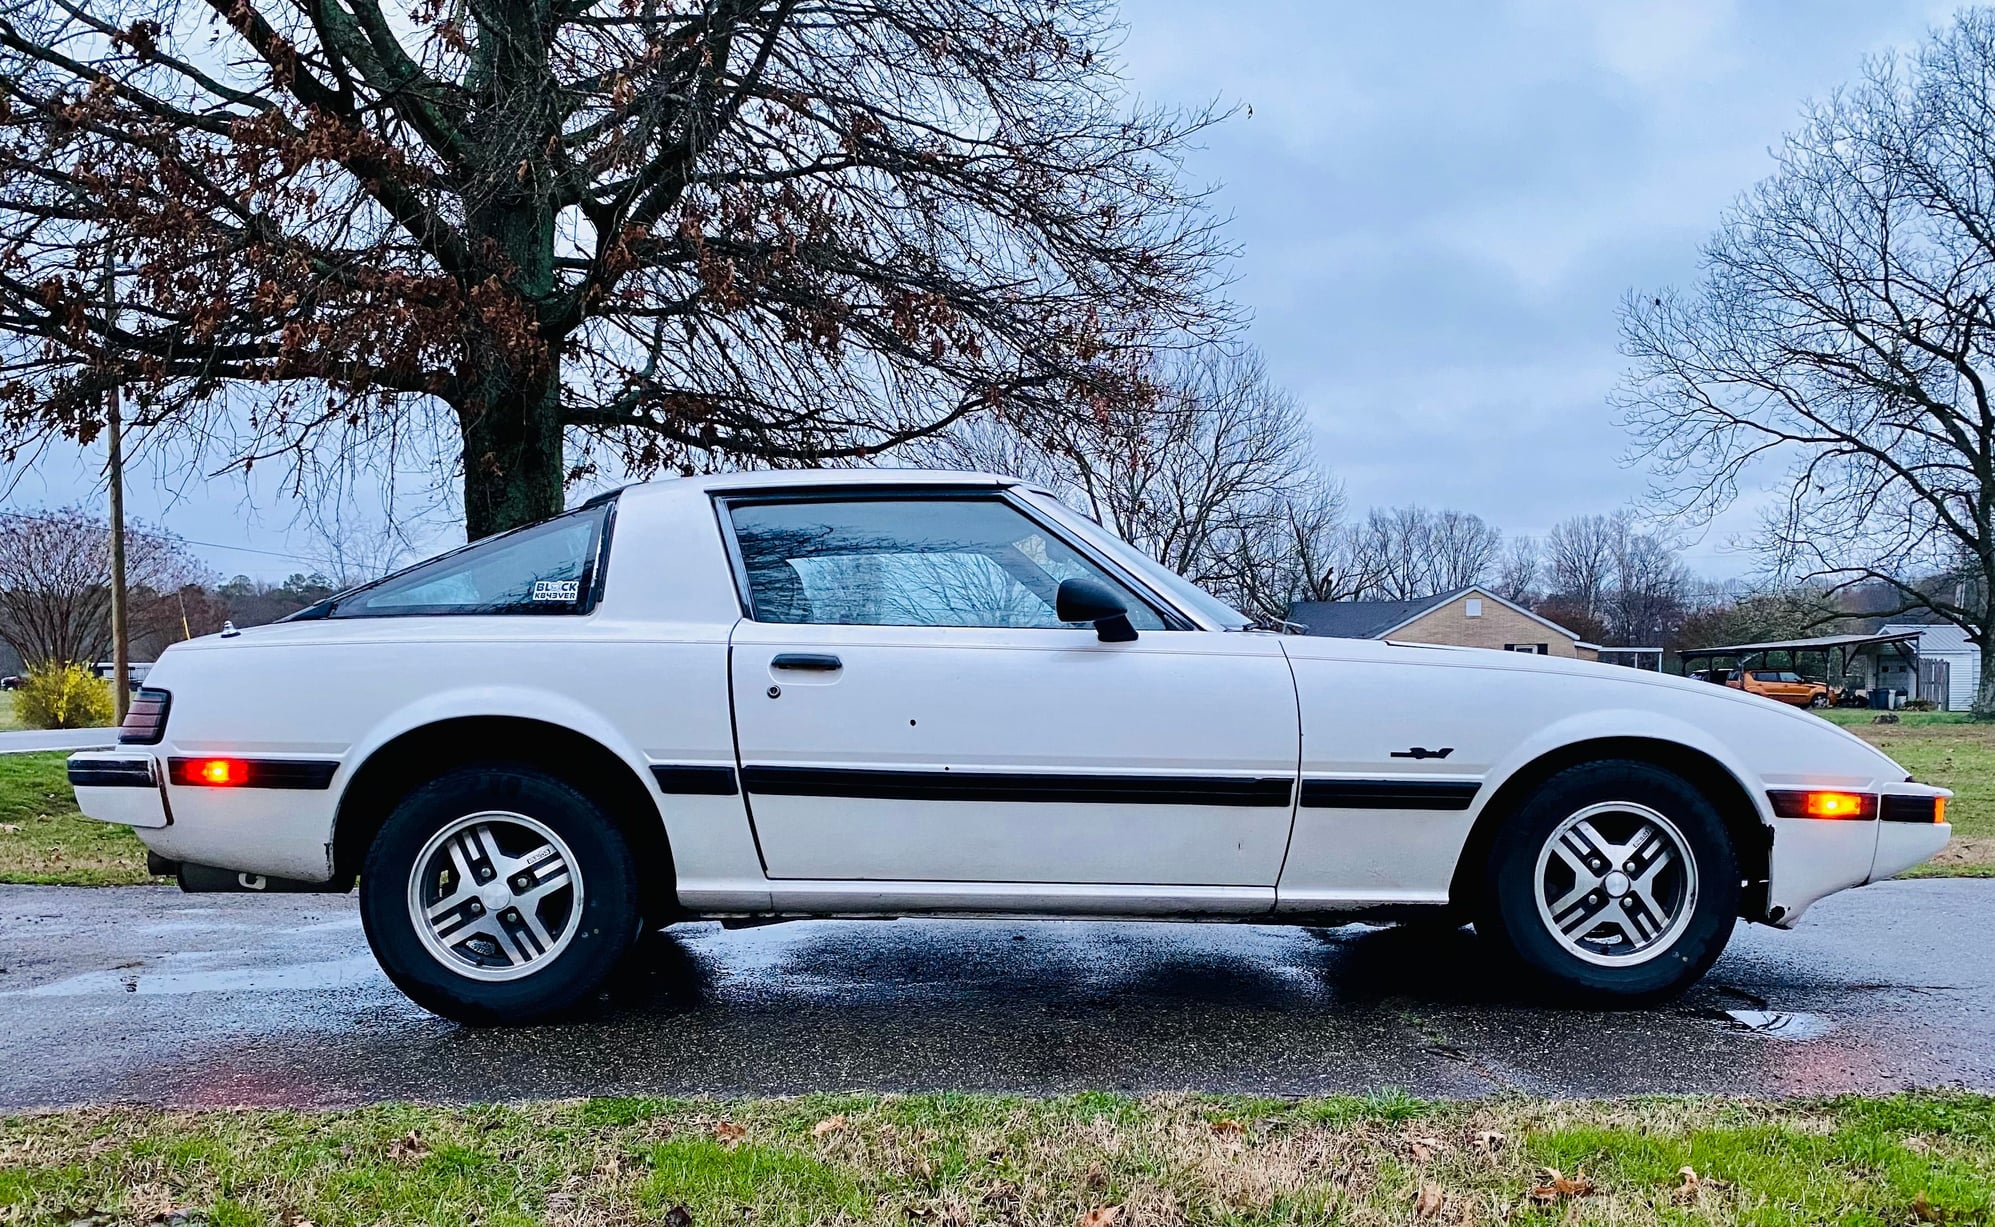 1985 Mazda RX-7 - 1985 RX-7 GSL North AL - Used - VIN JM1FB3312F0894876 - 182,374 Miles - Manual - White - Athens, AL 35614, United States